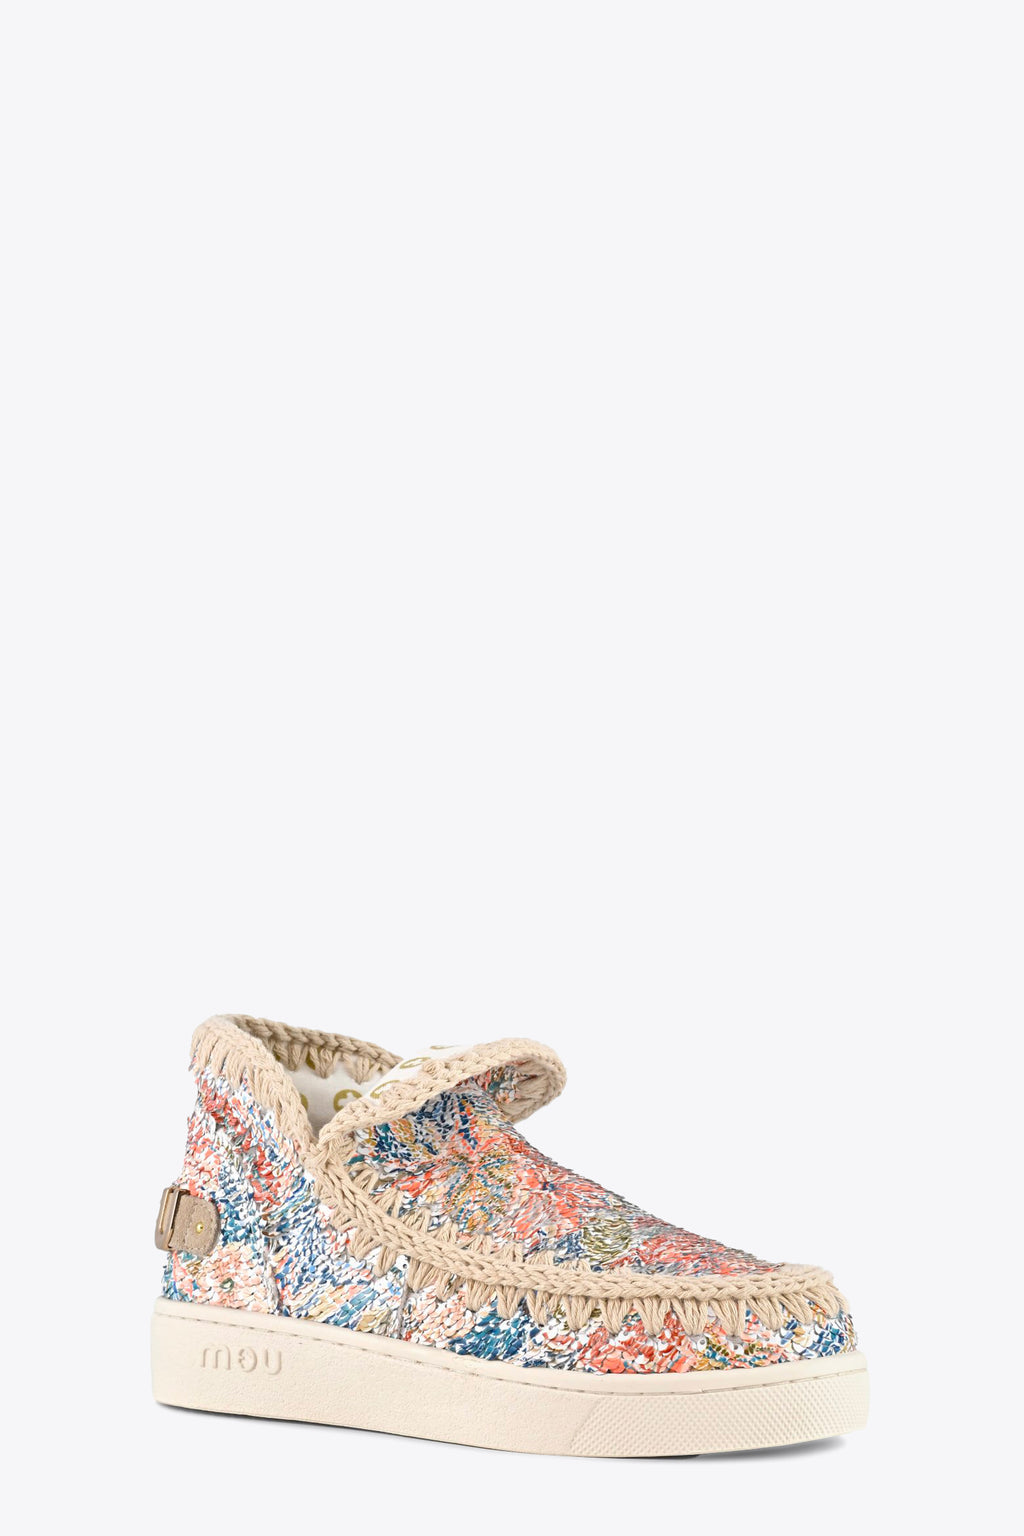 alt-image__Multicolour-printed-sequins-slip-on-sneaker---Summer-eskimo-sneaker-printed-sequins